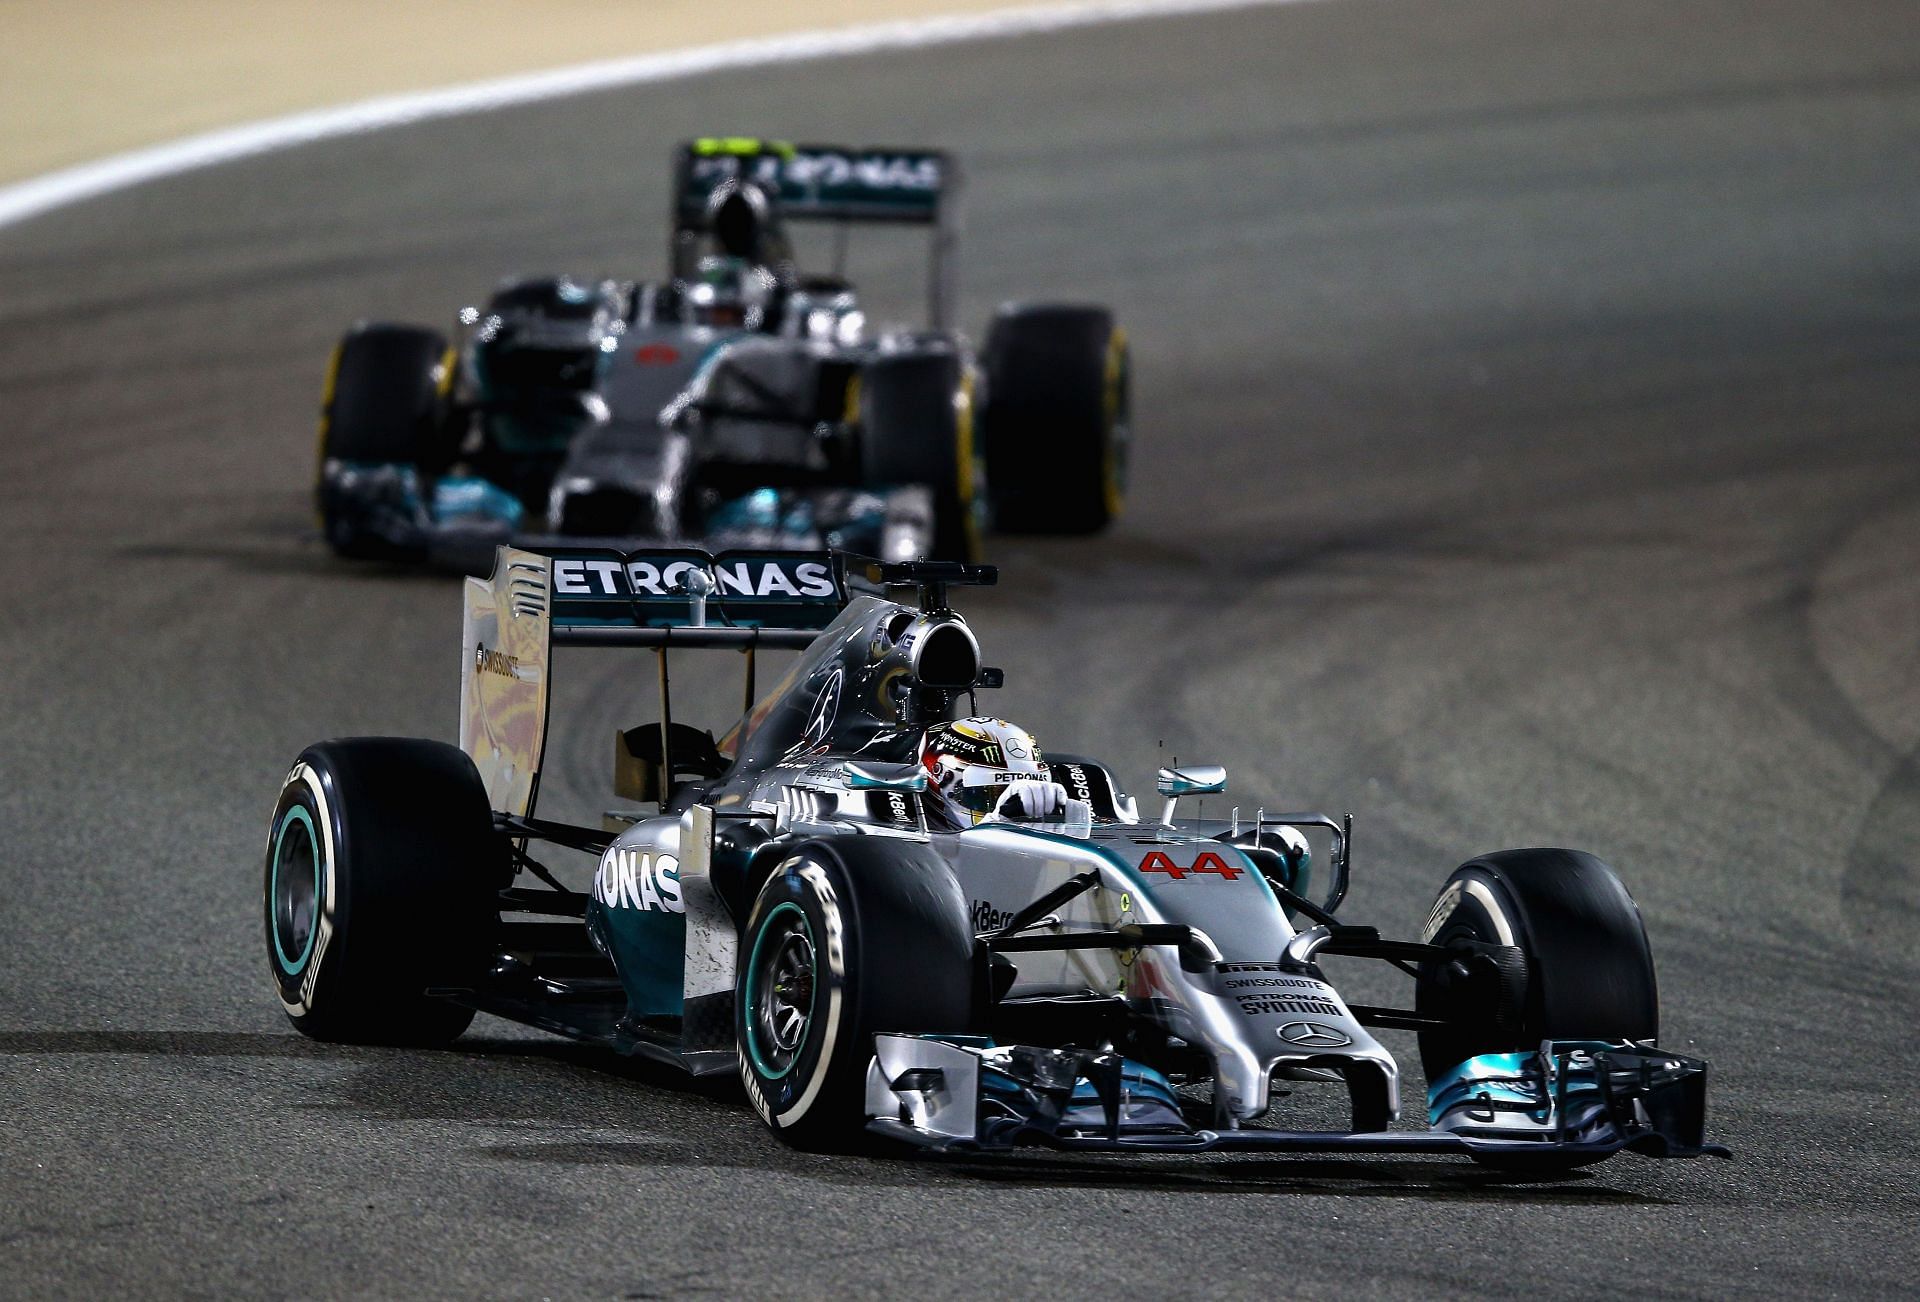 Lewis Hamilton - #44 leads Nico Rosberg - #06, both driving Mercedes W05s, 2014 Bahrain Grand Prix